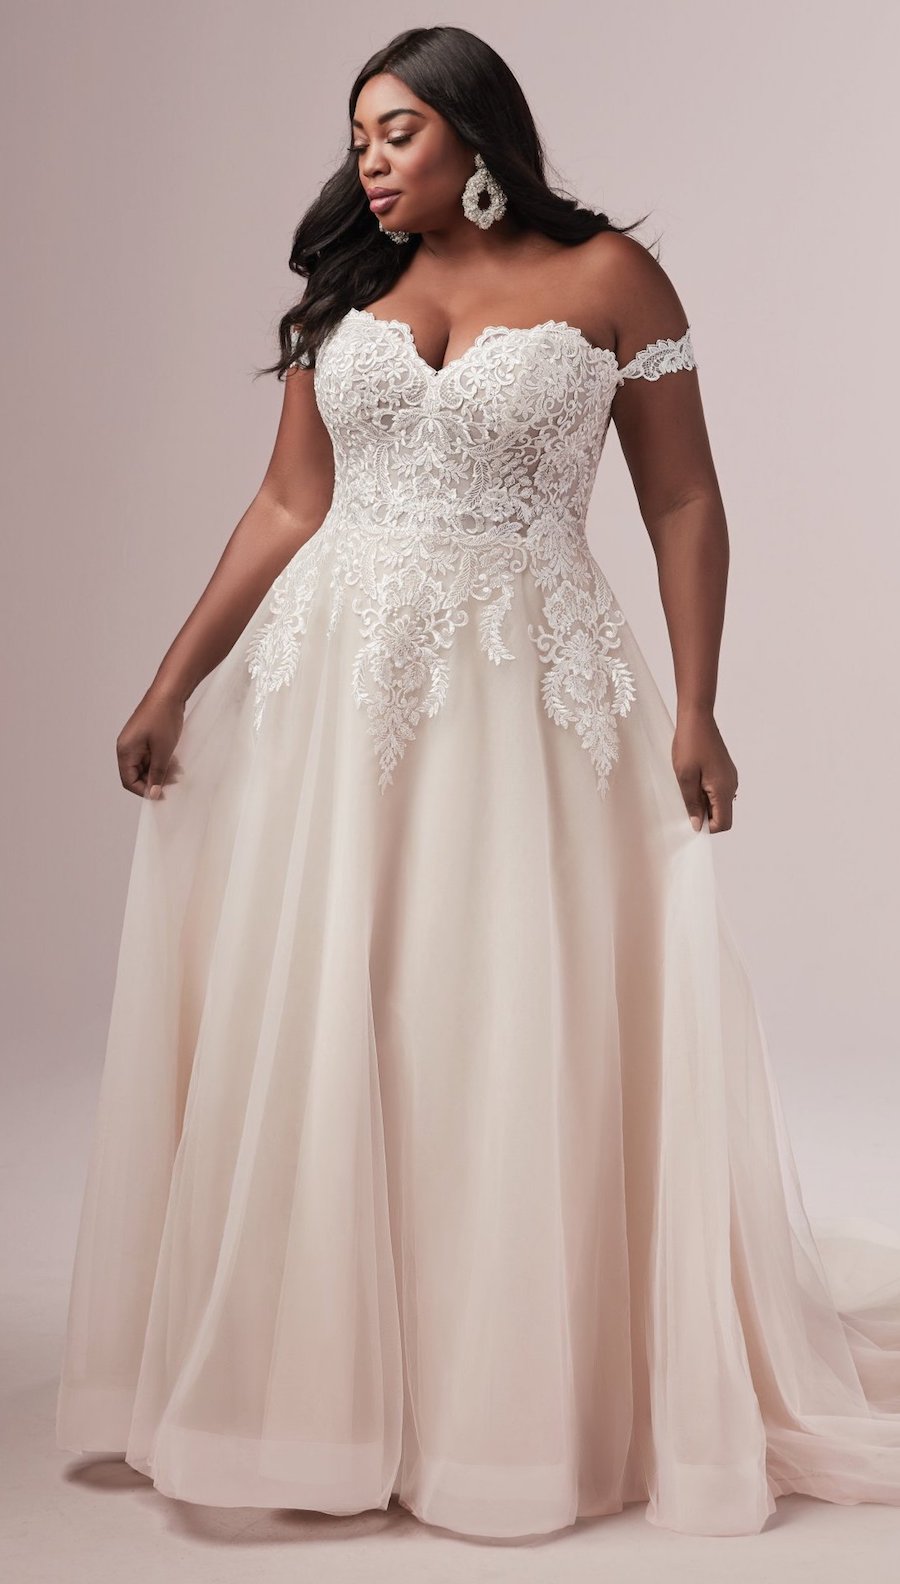 12 Gorgeous Plus Size Wedding Dresses For The Curvy Bride 0466